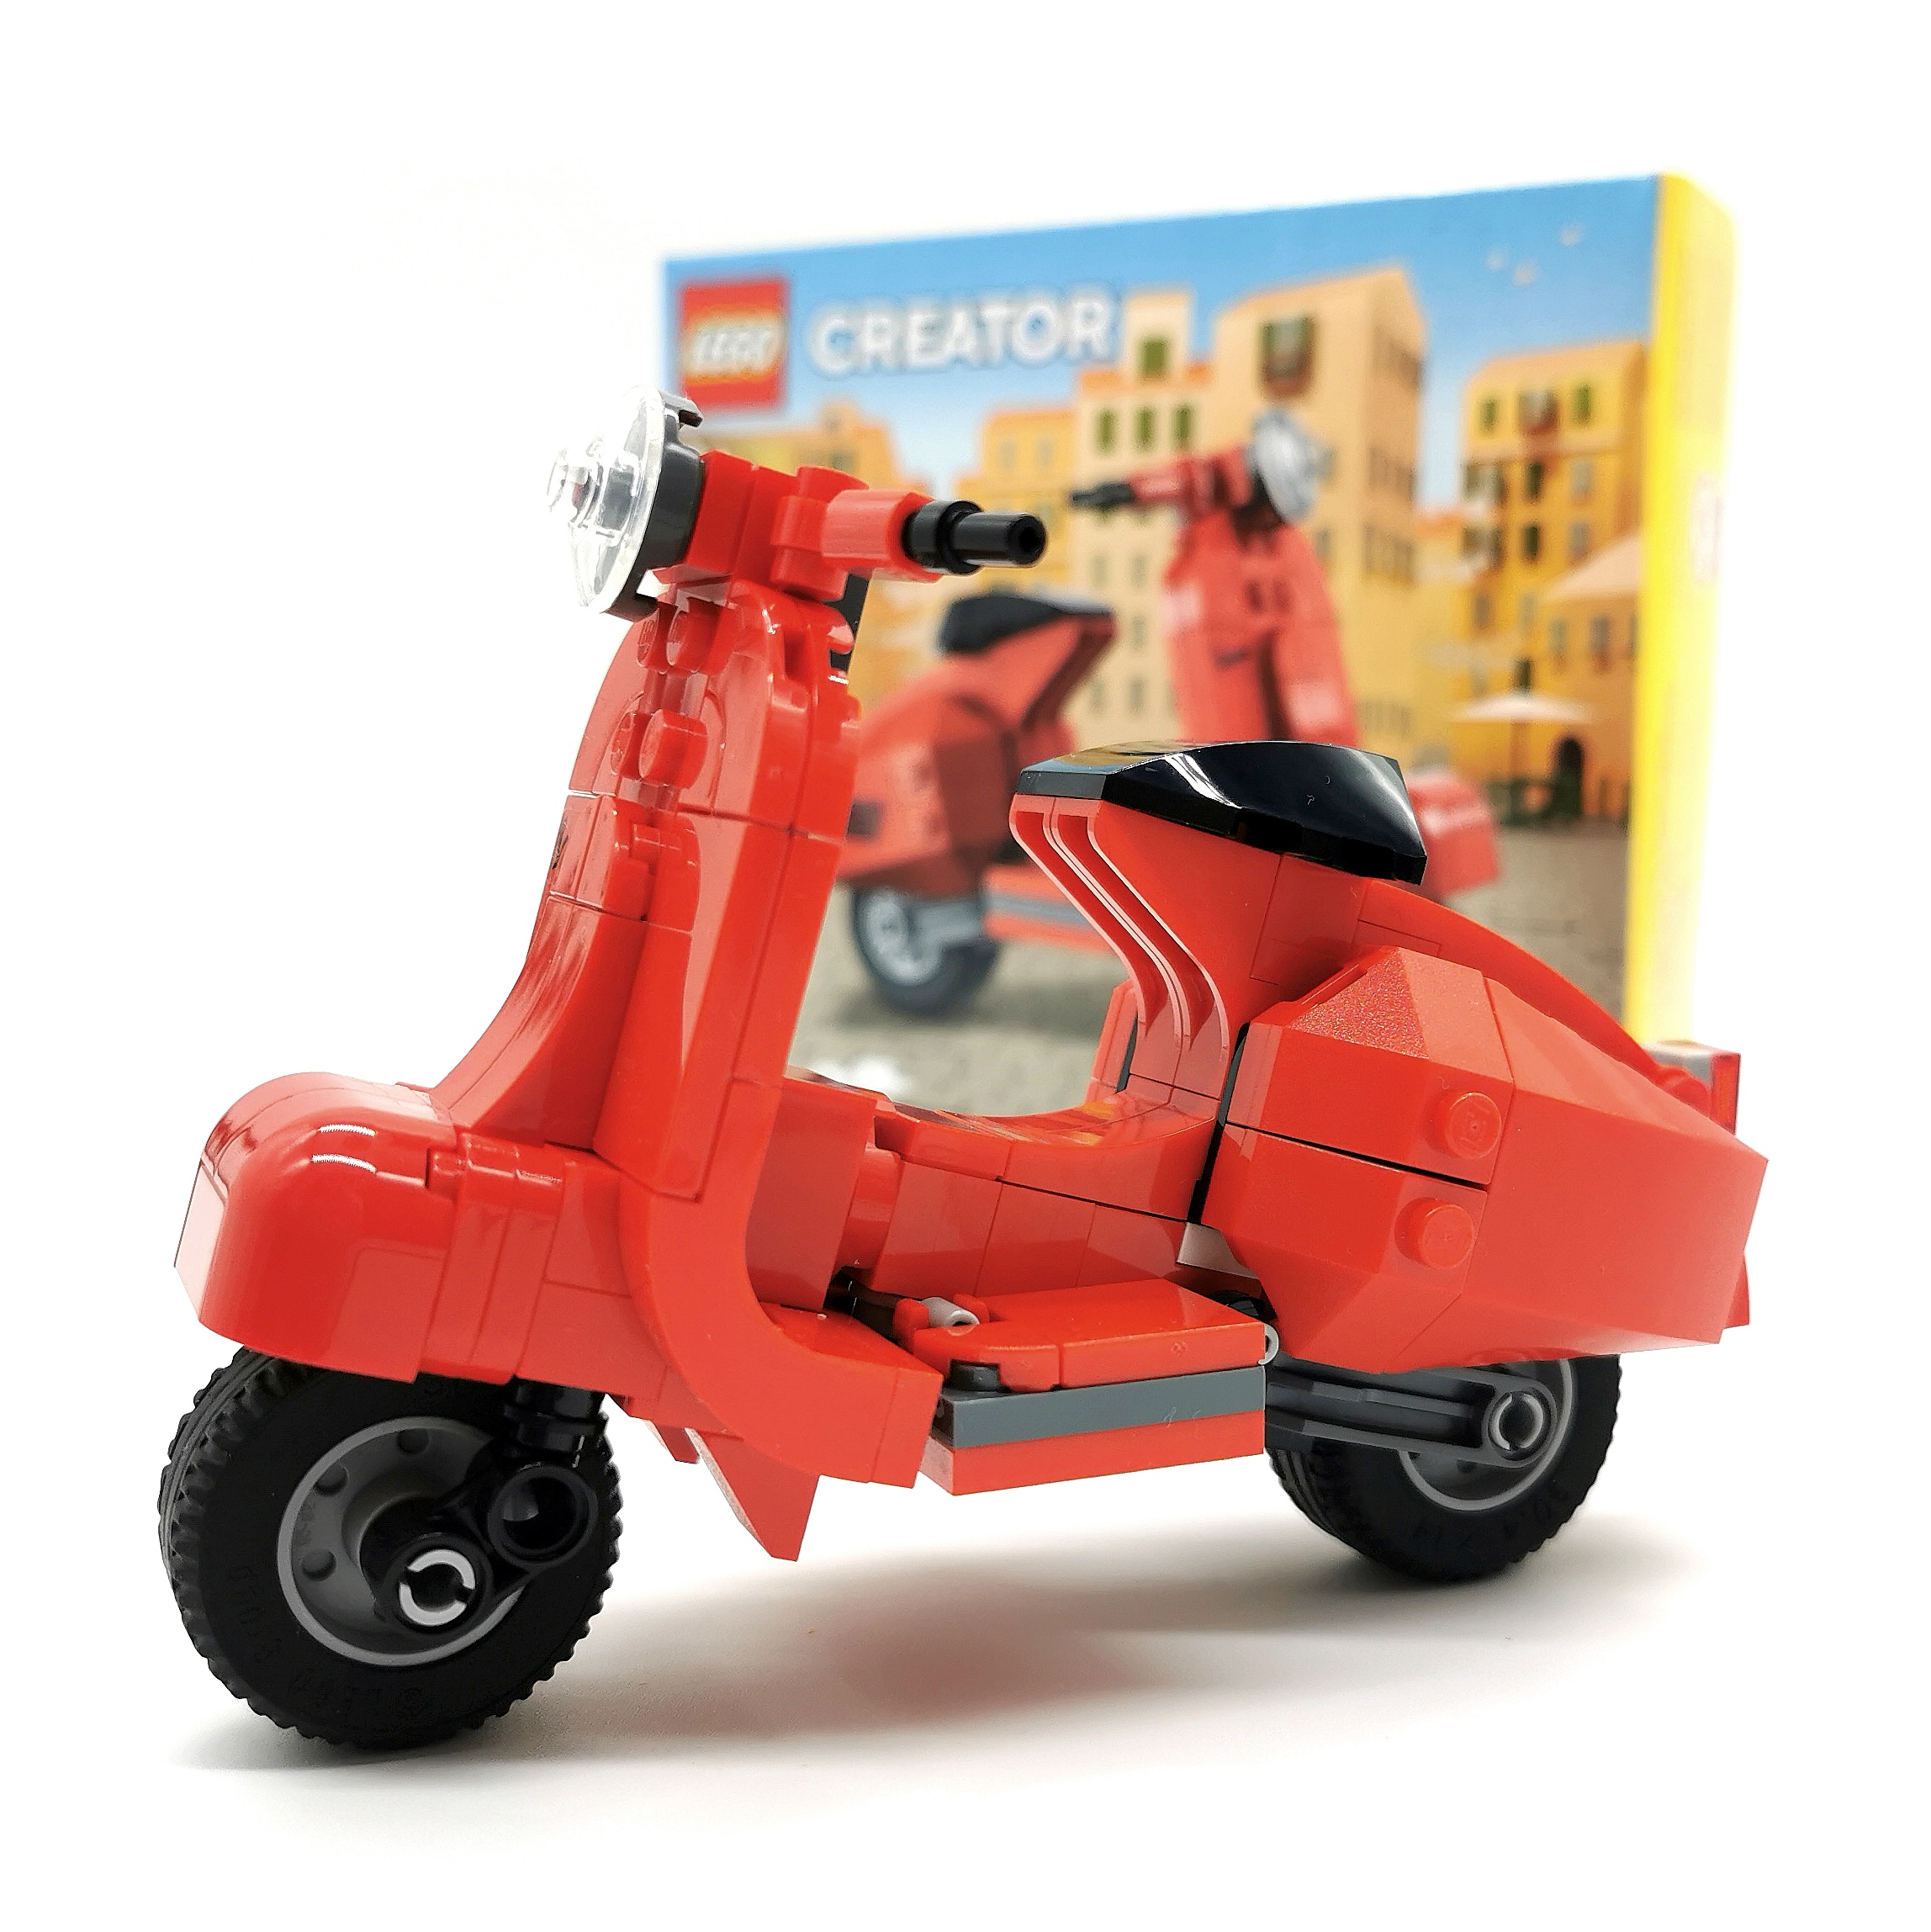 40517  Lego Creator Expert Vespa : : Toys & Games